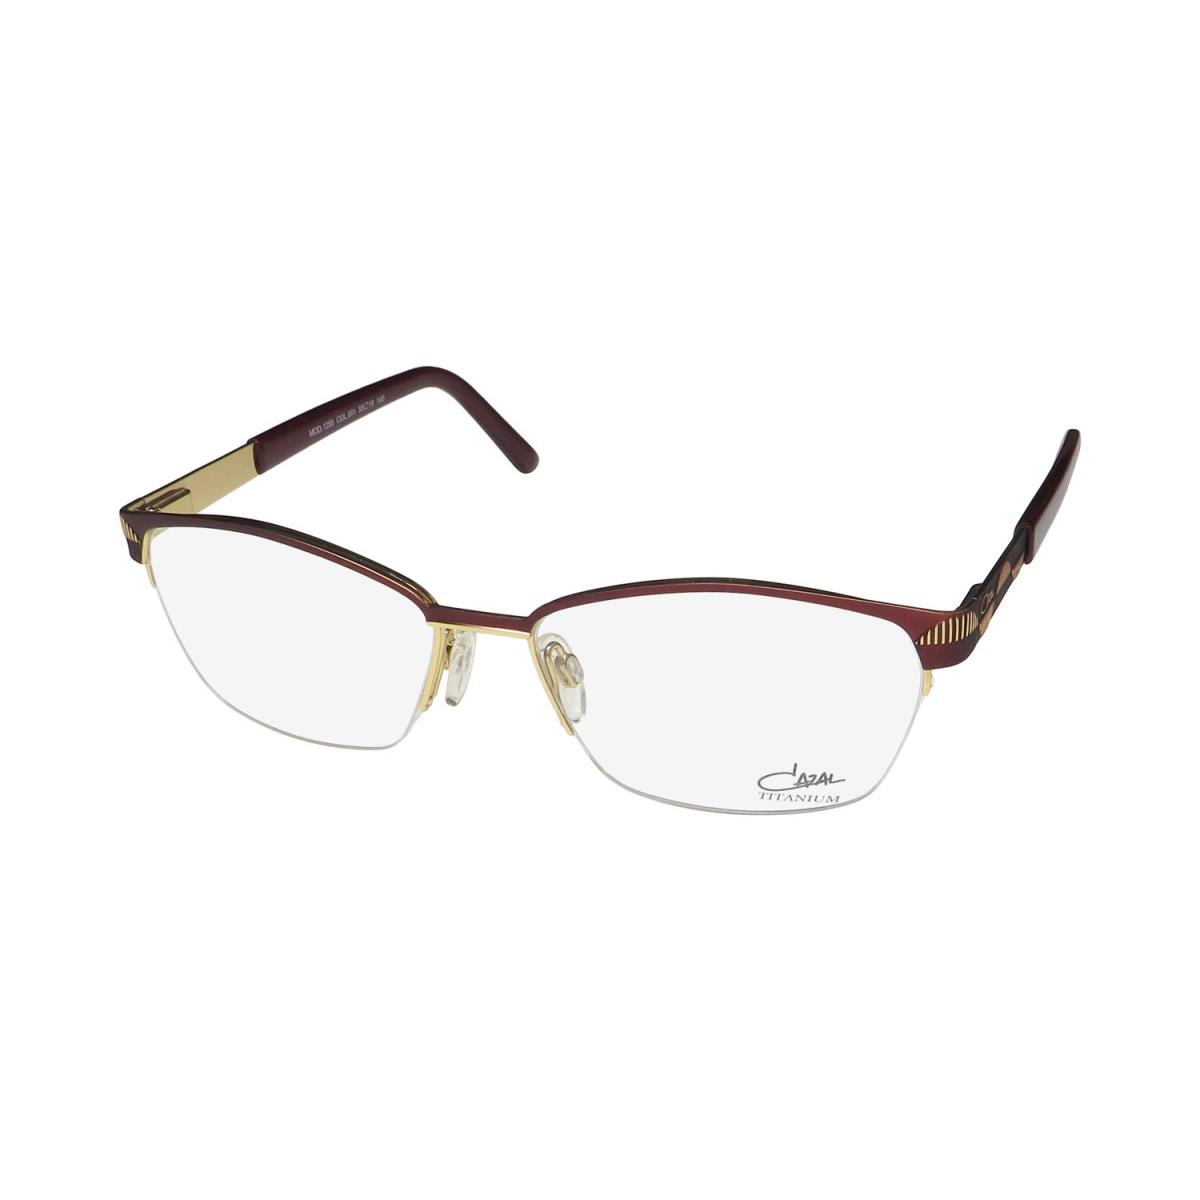 Cazal 1255 Titanium Made IN Germany NO Allergy Metal Rare Eyeglass Frame/eyewear Bordeaux / Gold